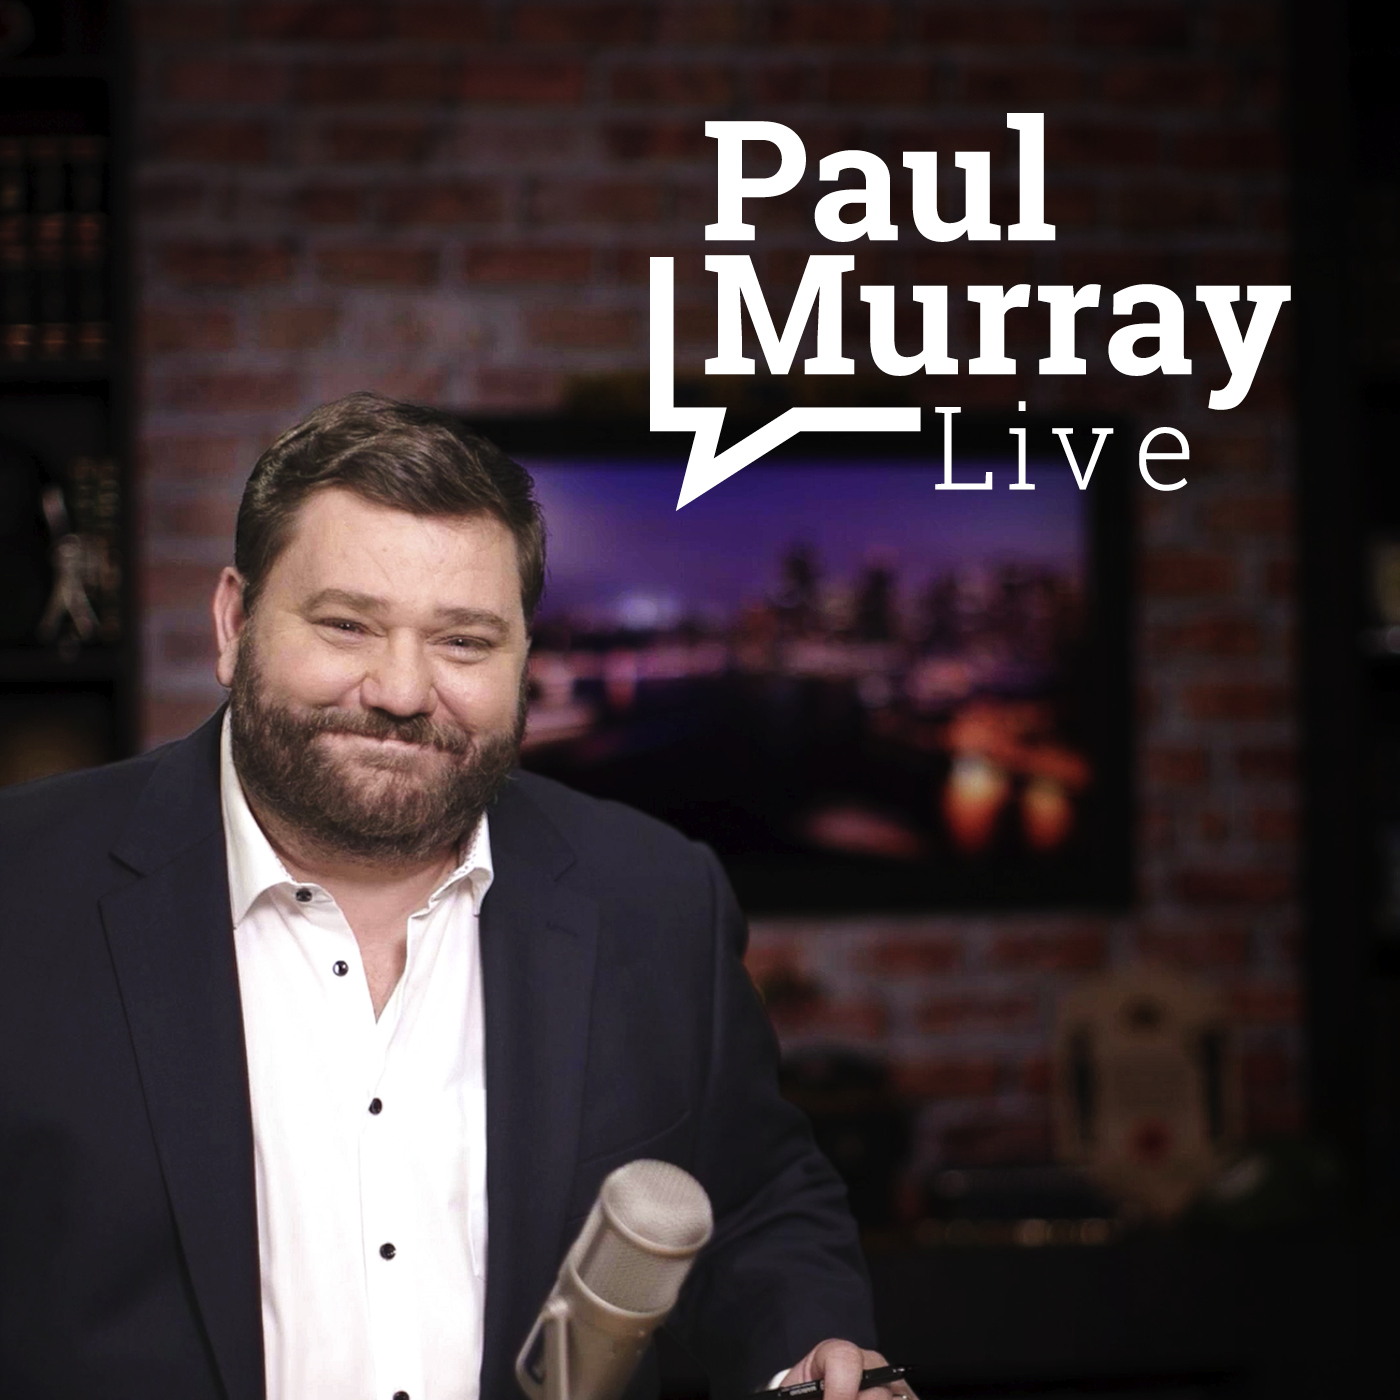 Paul Murray Live, Wednesday 22 June